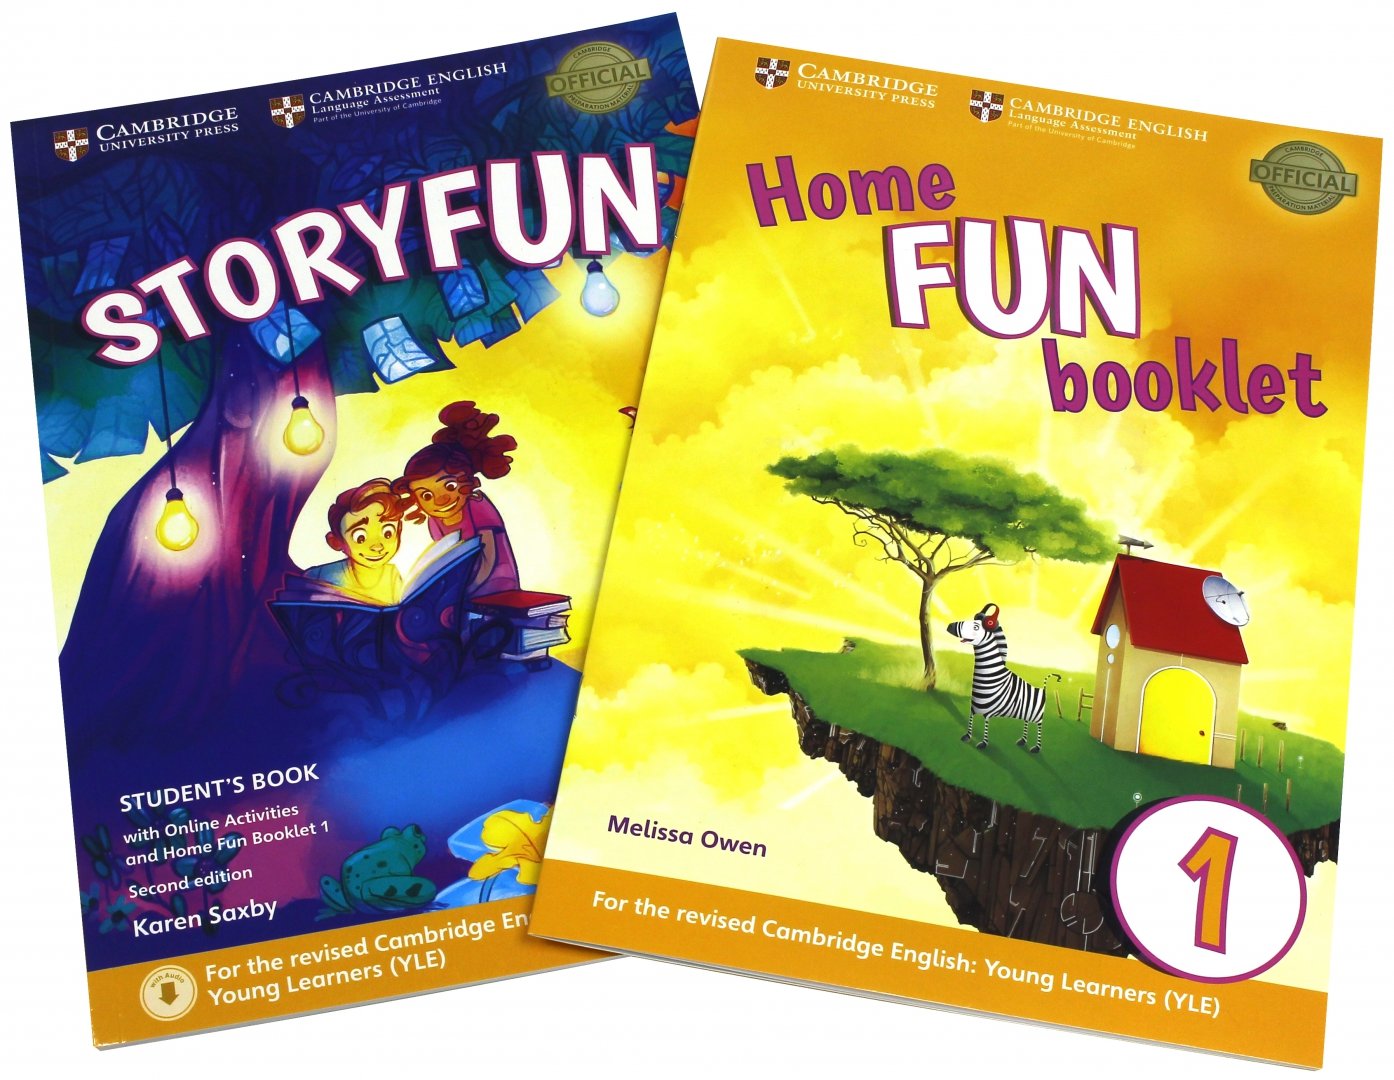 Home fun booklet. Storyfun + Home fun booklet. Storyfun Starters Cambridge. Storyfun 4 Home fun booklet 4. Storyfun 1 student's book.